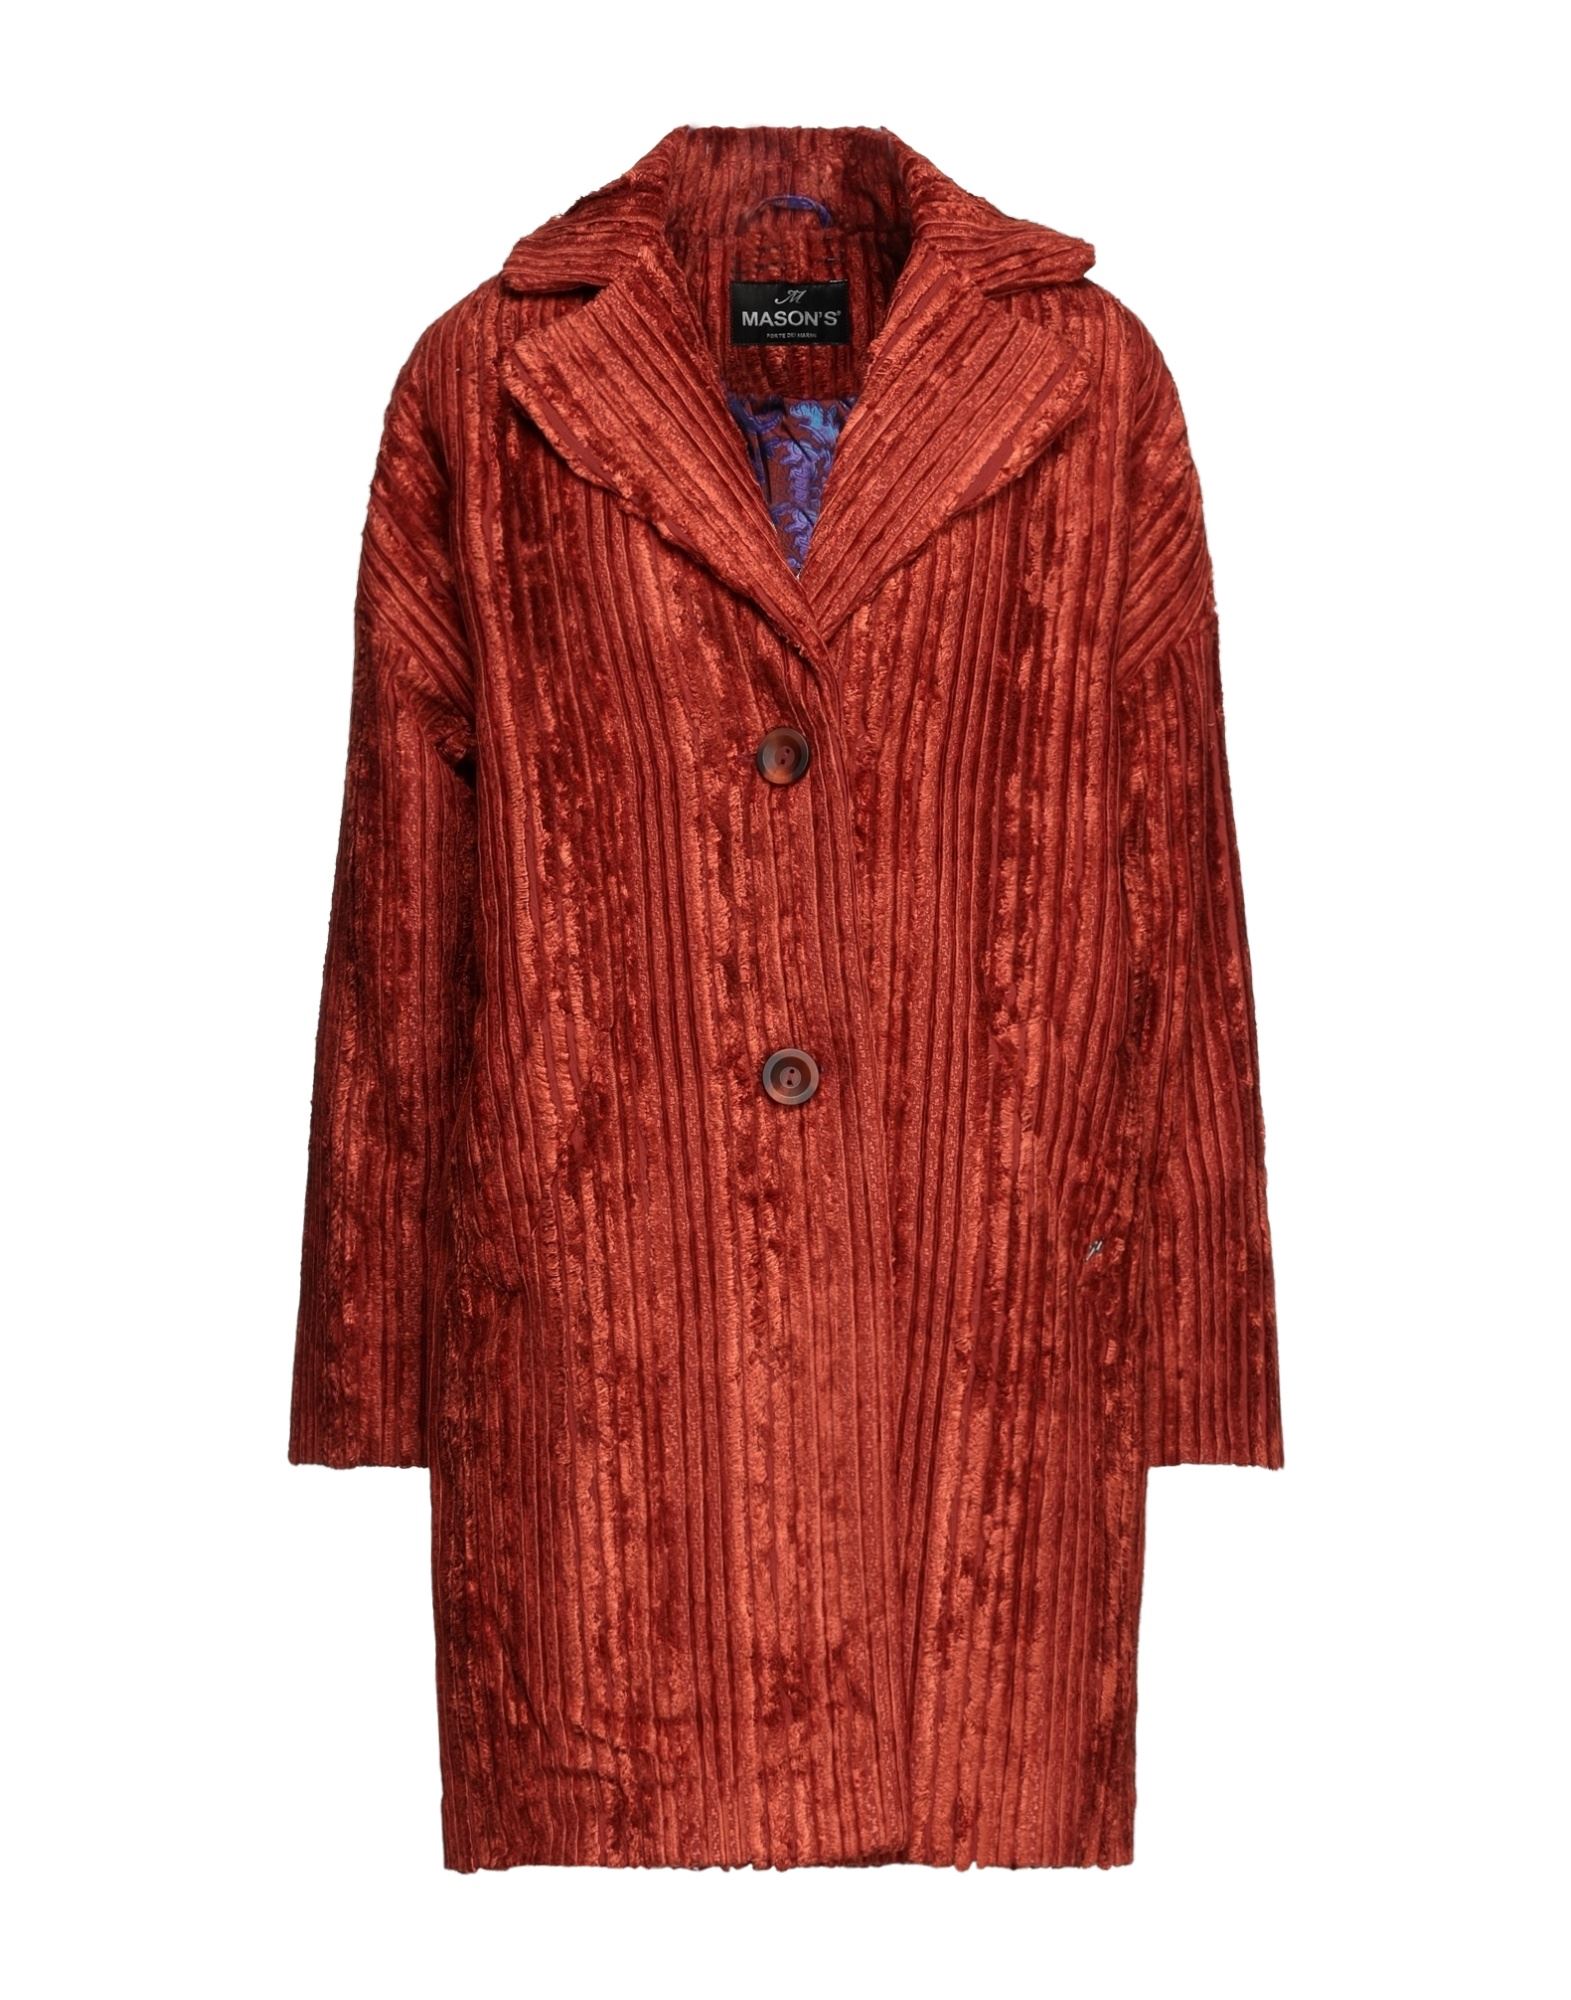 Mason's Coats In Rust